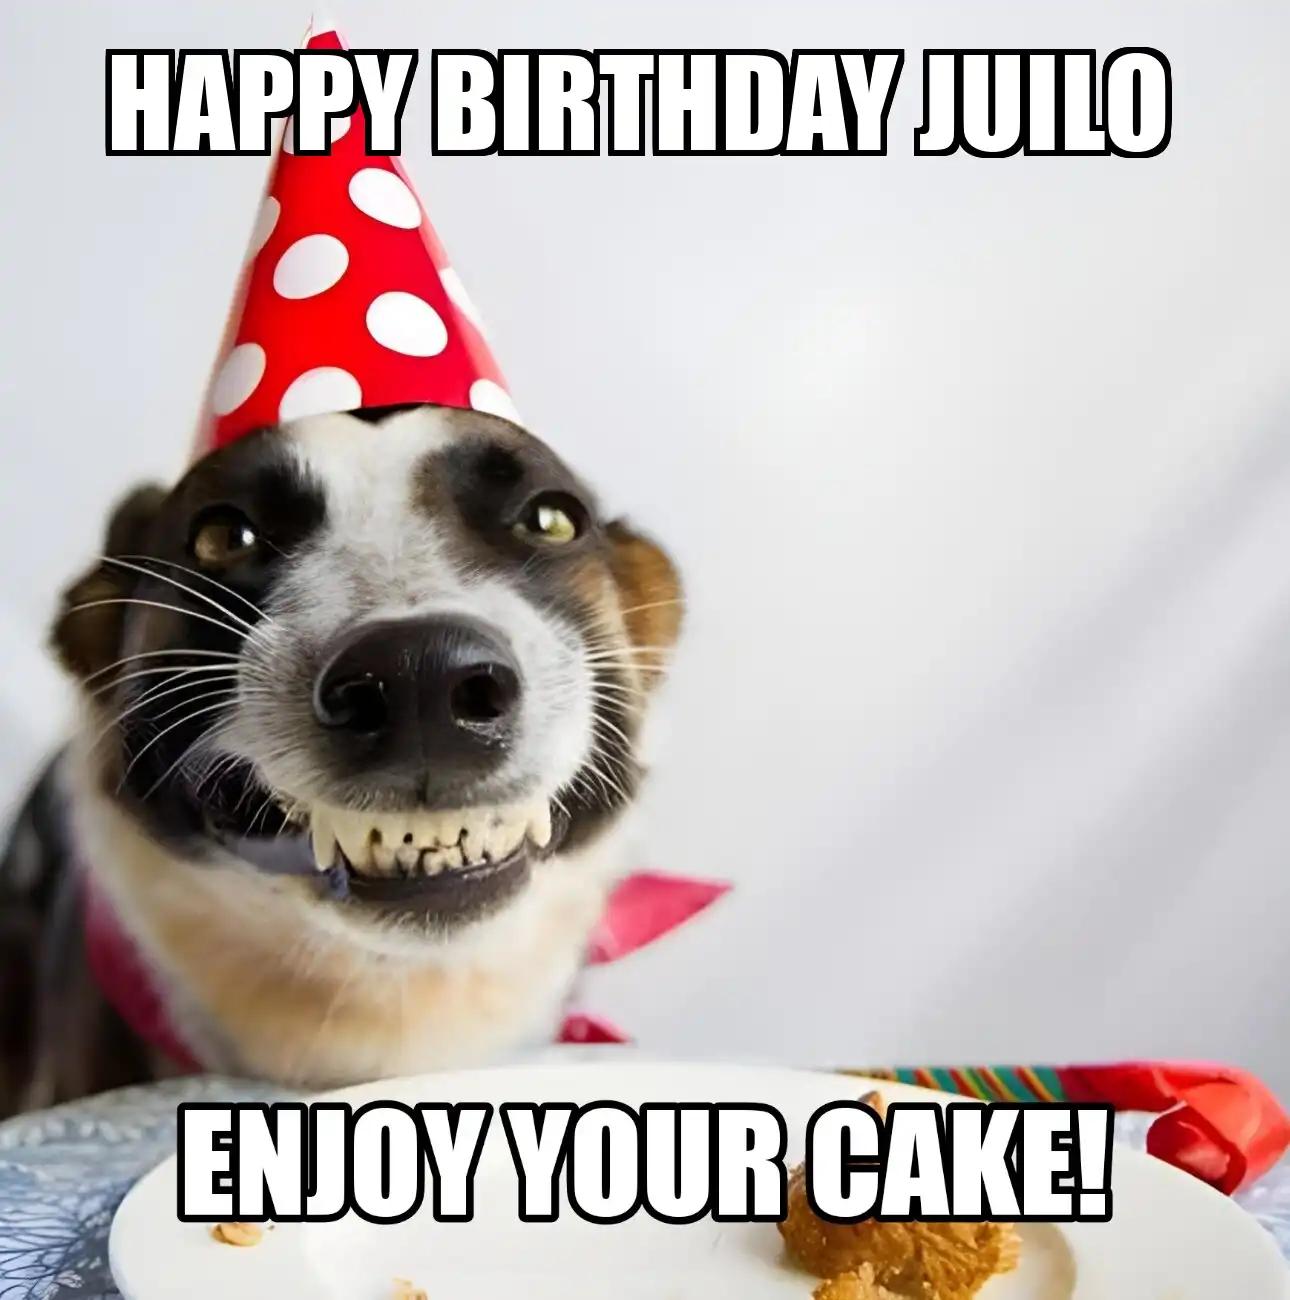 Happy Birthday Juilo Enjoy Your Cake Dog Meme